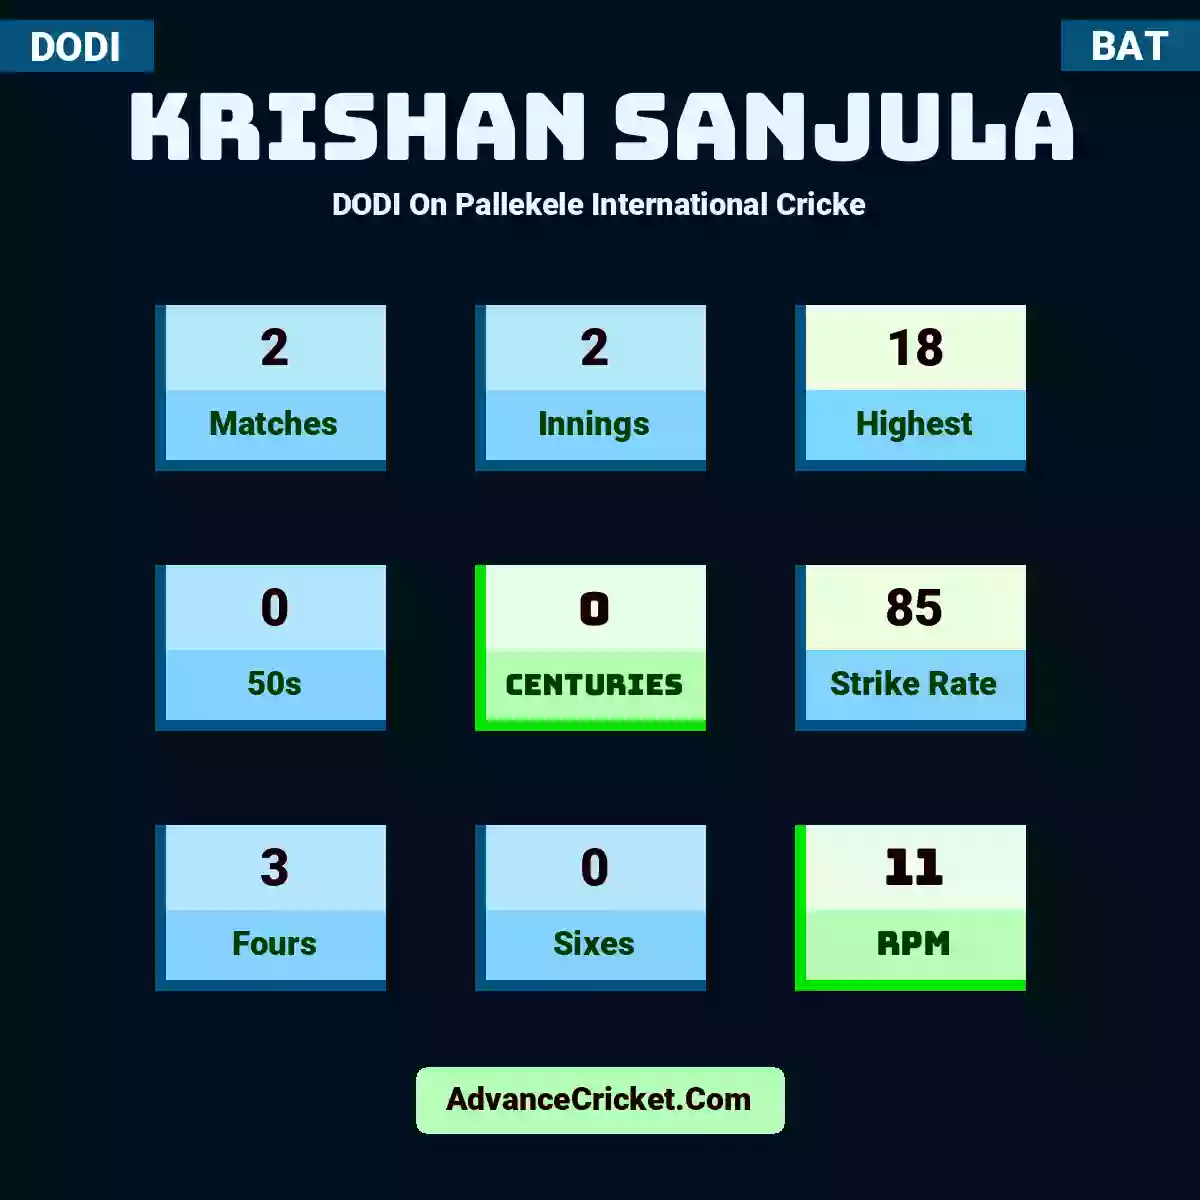 Krishan Sanjula DODI  On Pallekele International Cricke, Krishan Sanjula played 2 matches, scored 18 runs as highest, 0 half-centuries, and 0 centuries, with a strike rate of 85. K.Sanjula hit 3 fours and 0 sixes, with an RPM of 11.